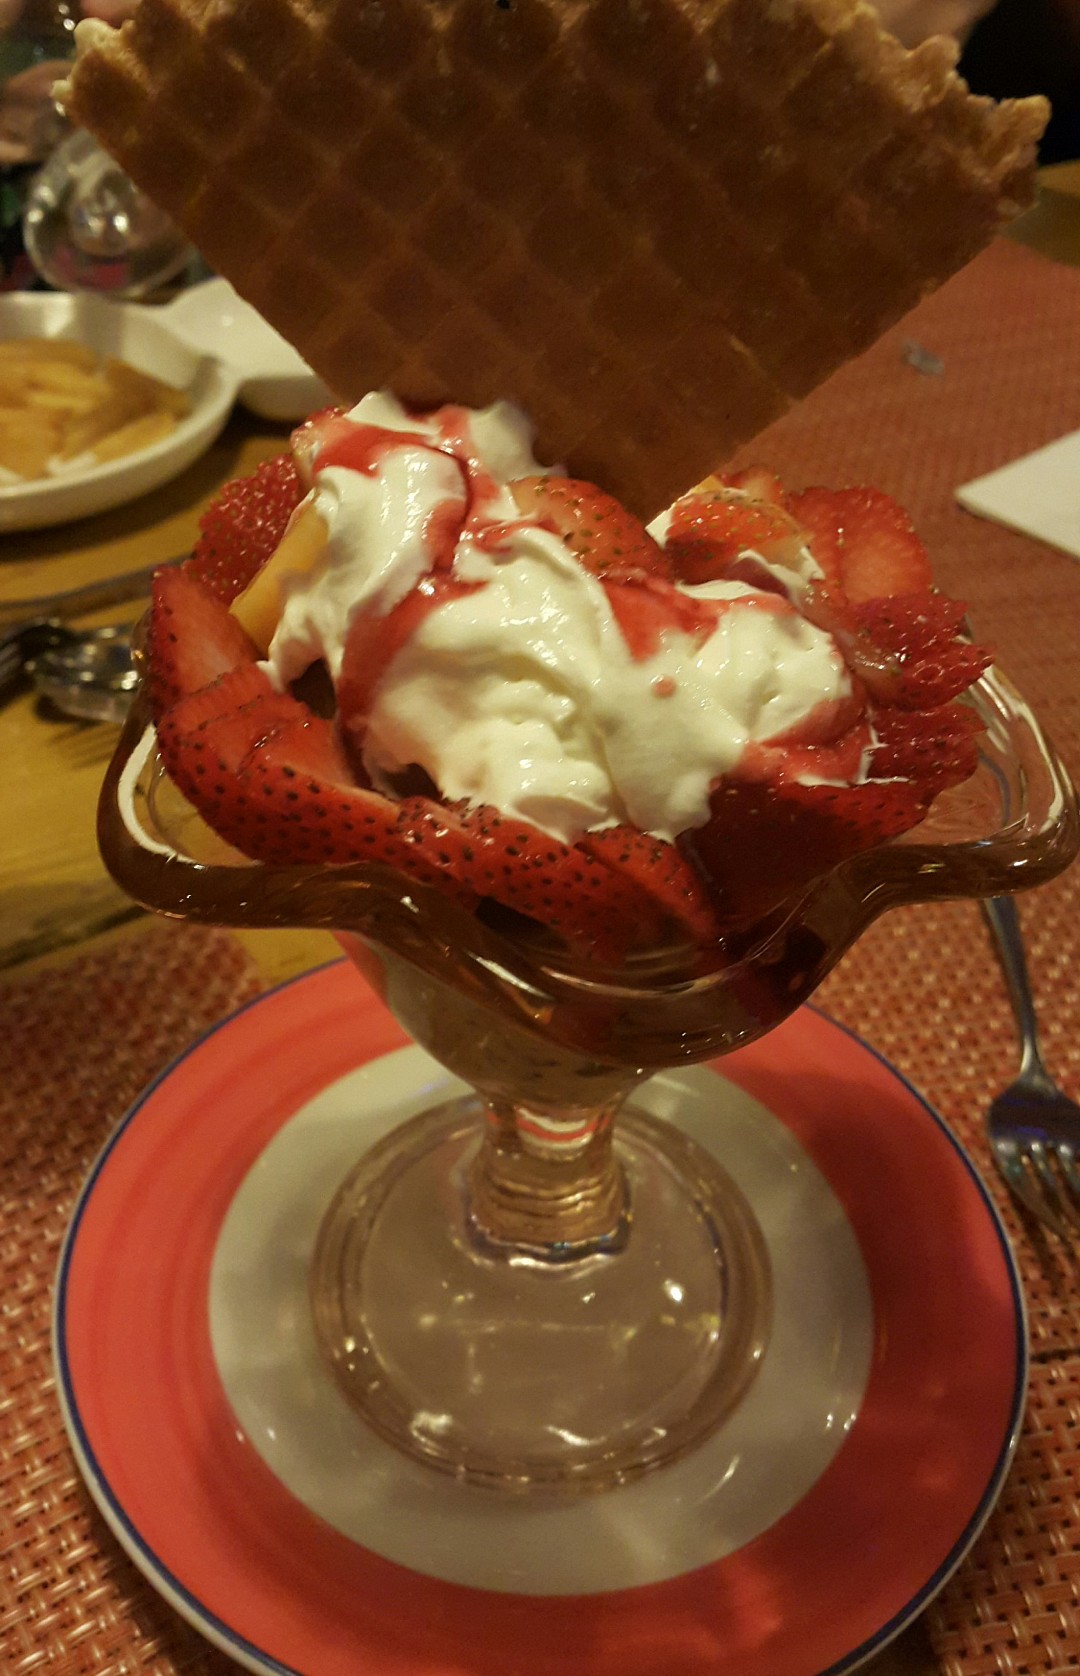 Valentino 😅
Its Scoop of #chocolate #icecream + #strawberry pieces + dream whip cream @ مقهى ومطعم الفرندا - البحرين